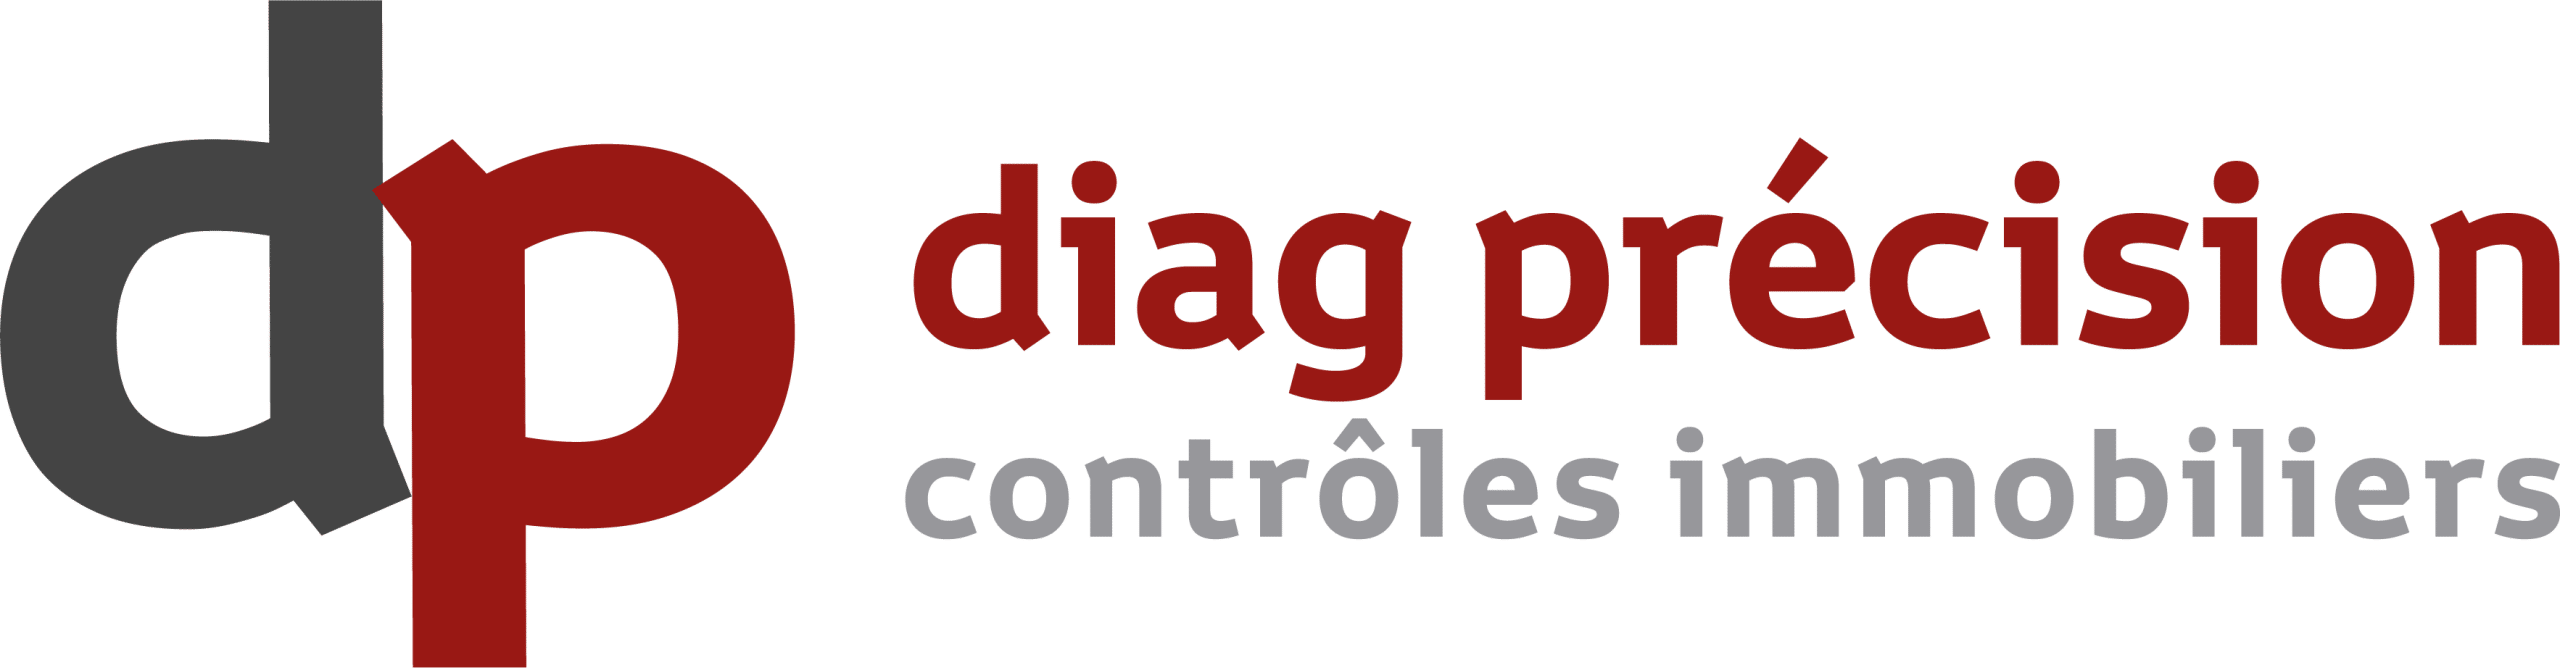 DIAG-PRECISION_logo-pro